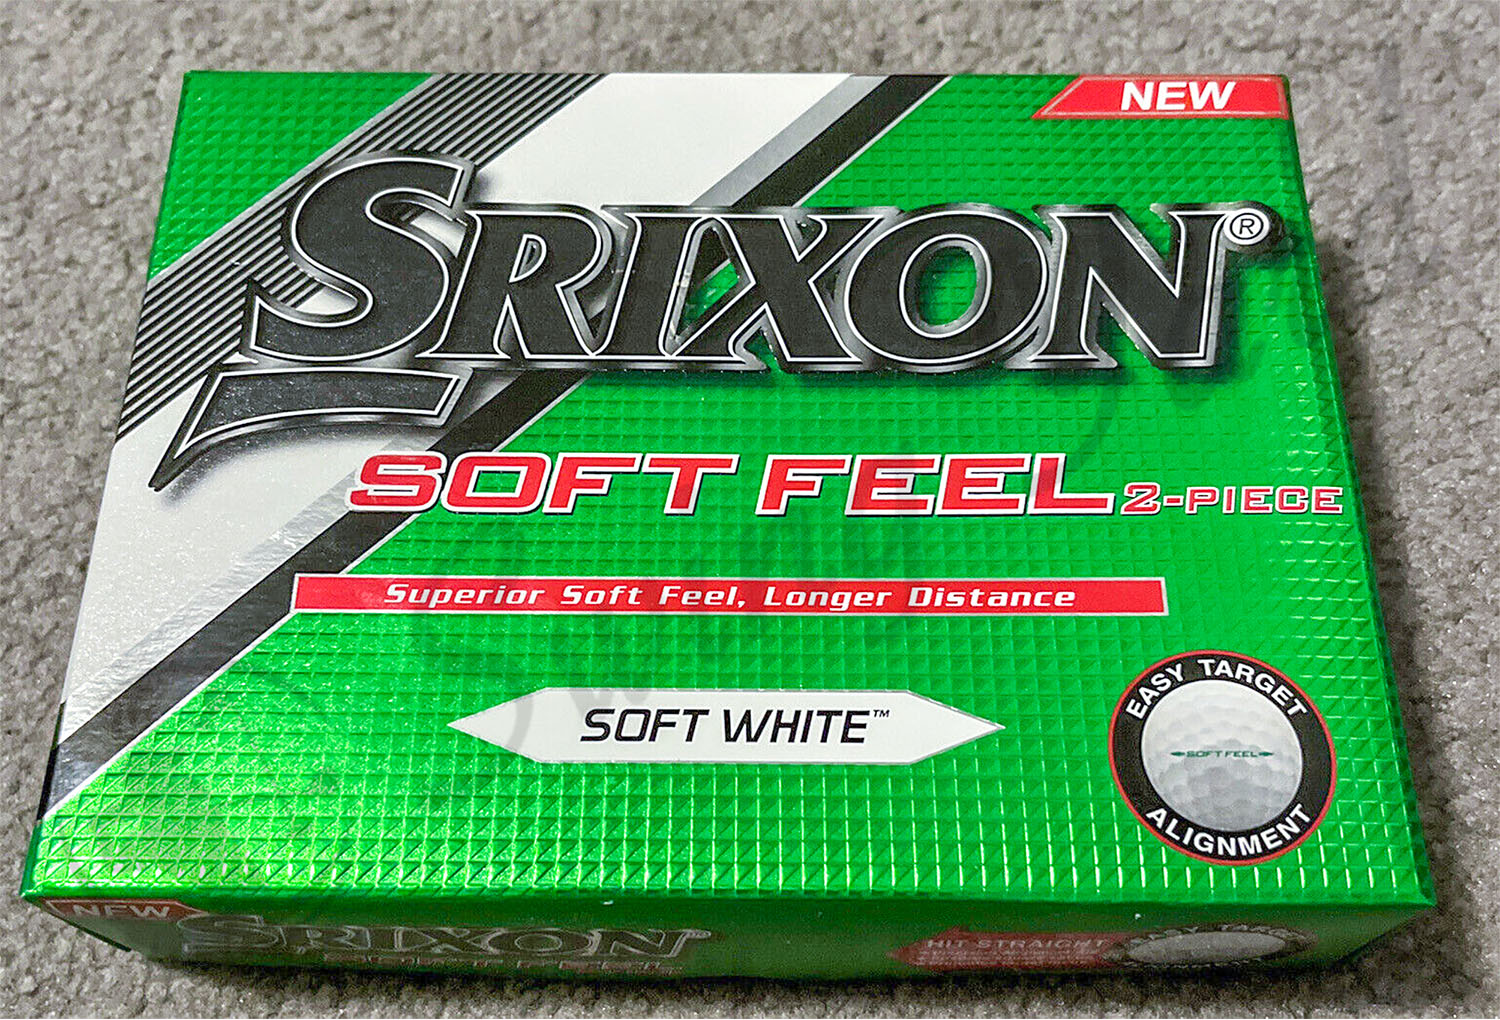 My new Srixon Soft Feel box in the living room